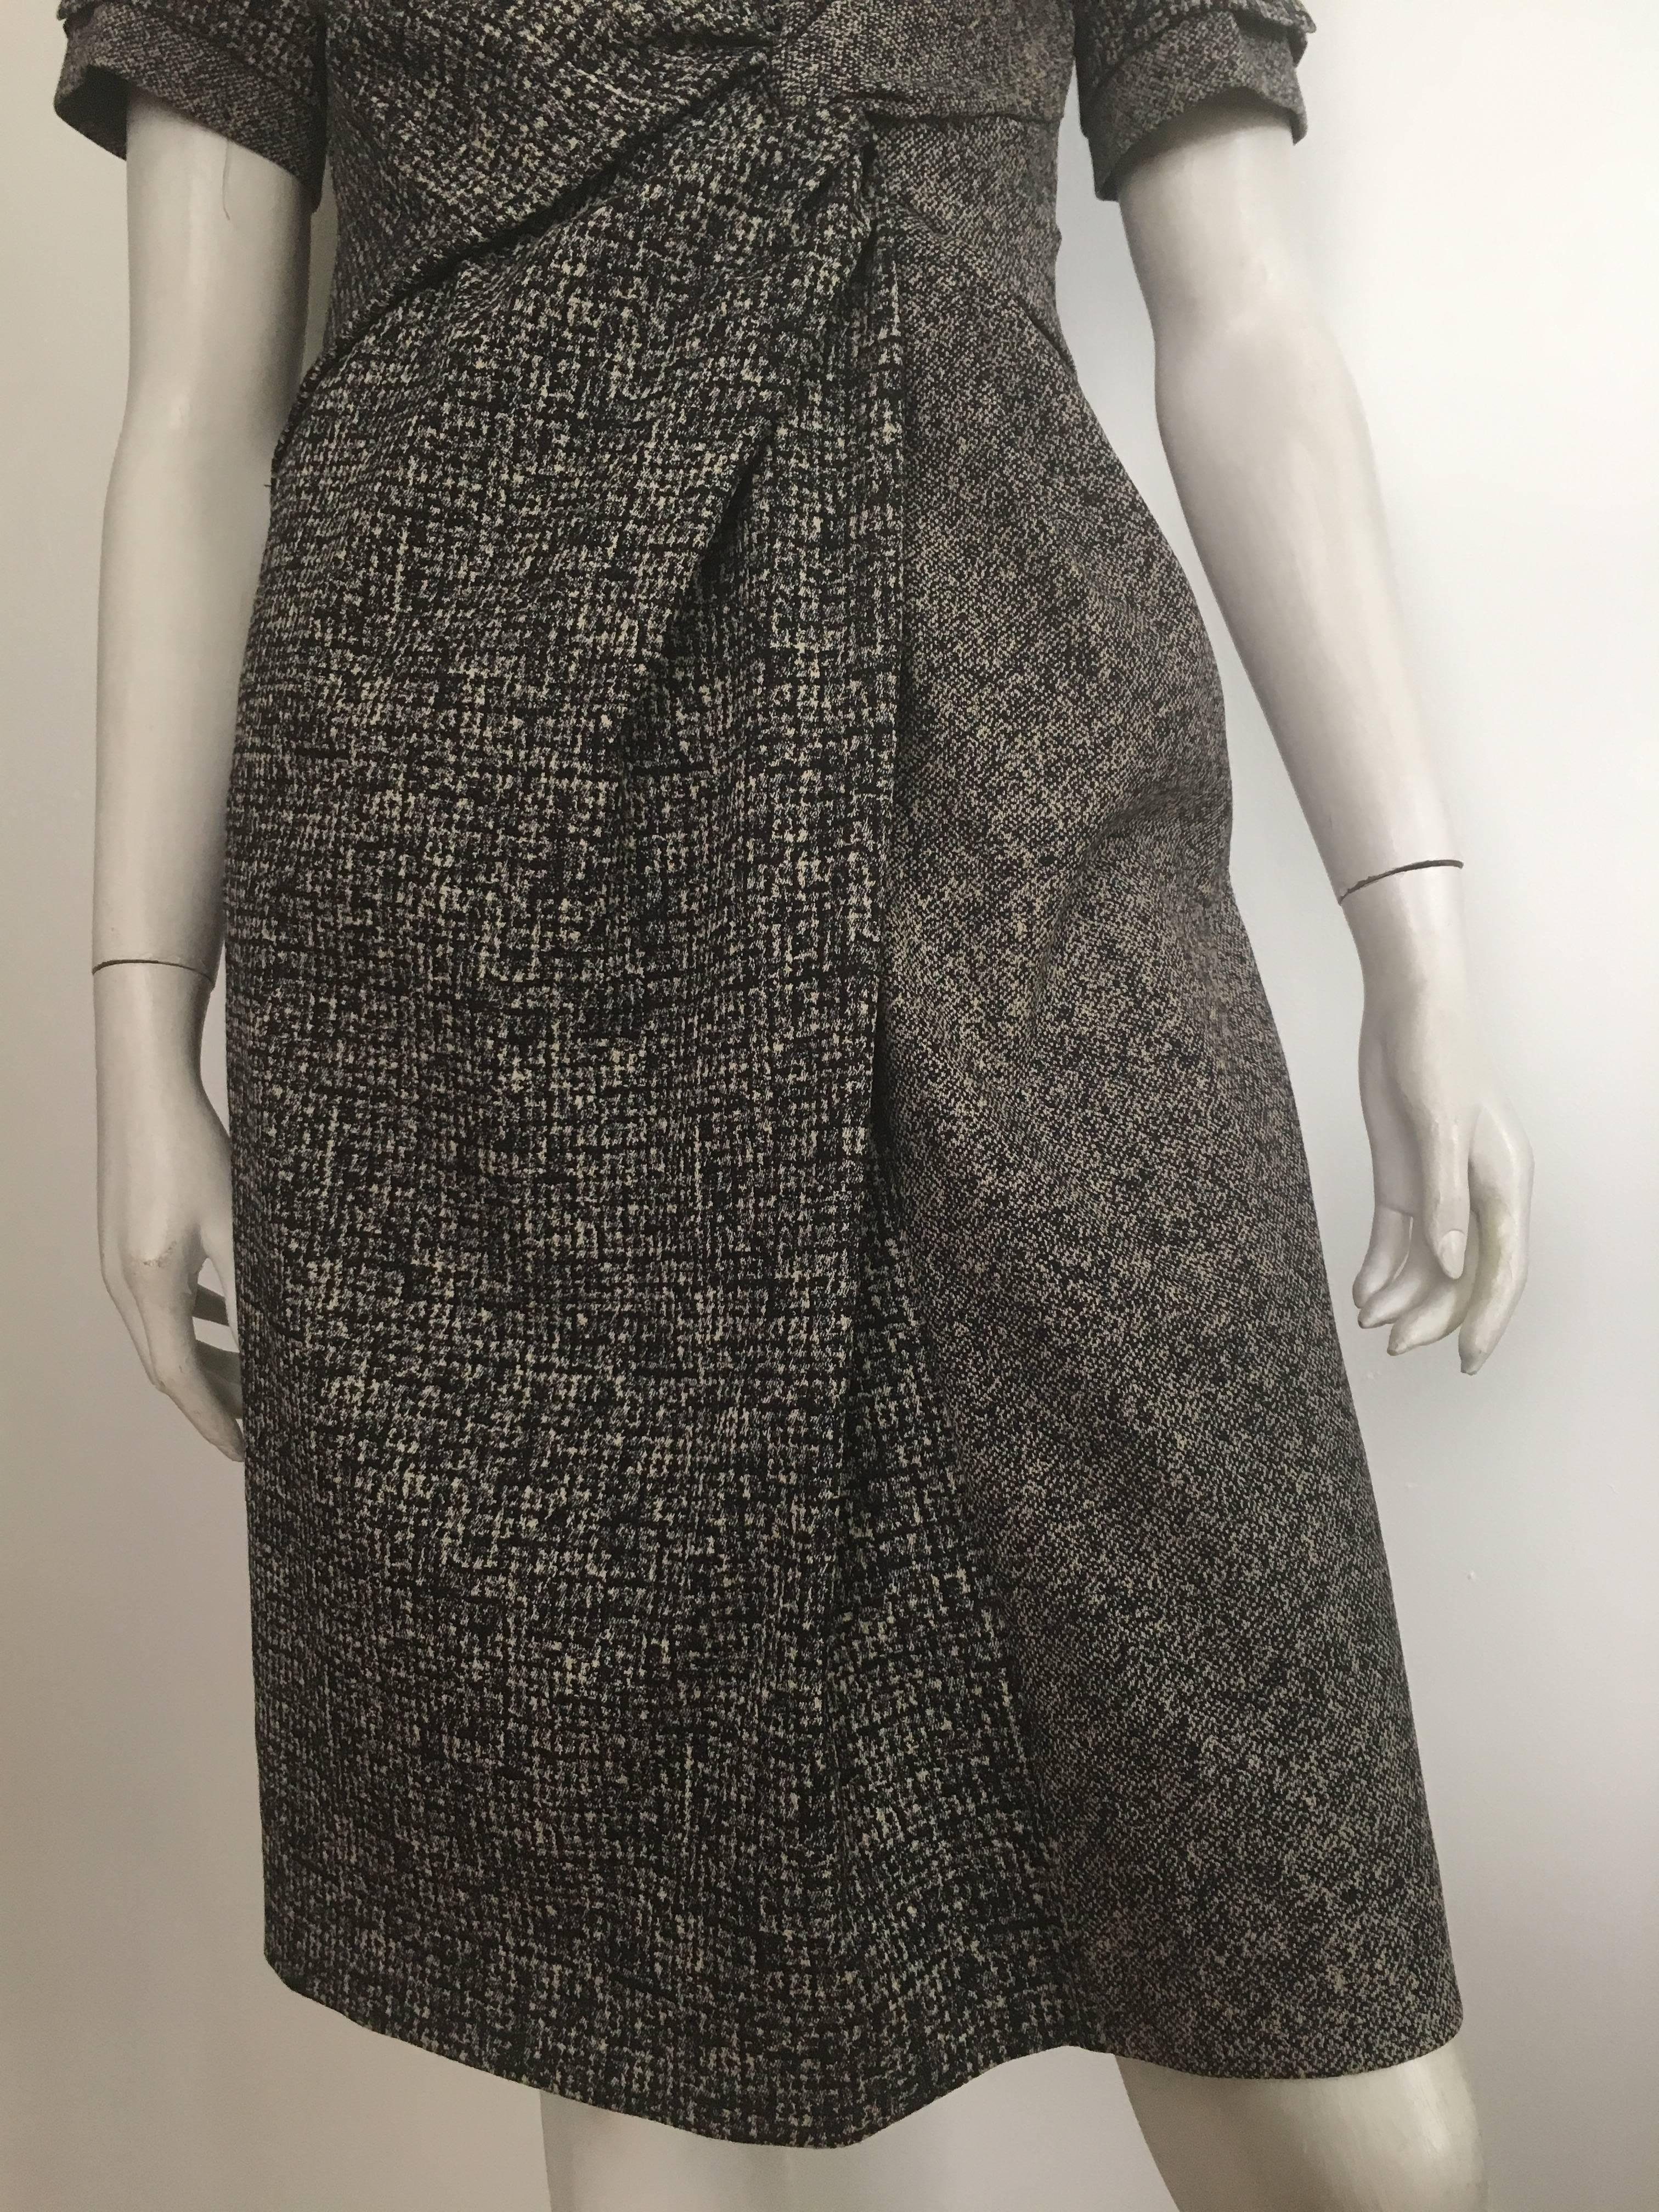 Paule Ka Cotton Black & Grey Casual Dress Size 10 / 12. For Sale 2